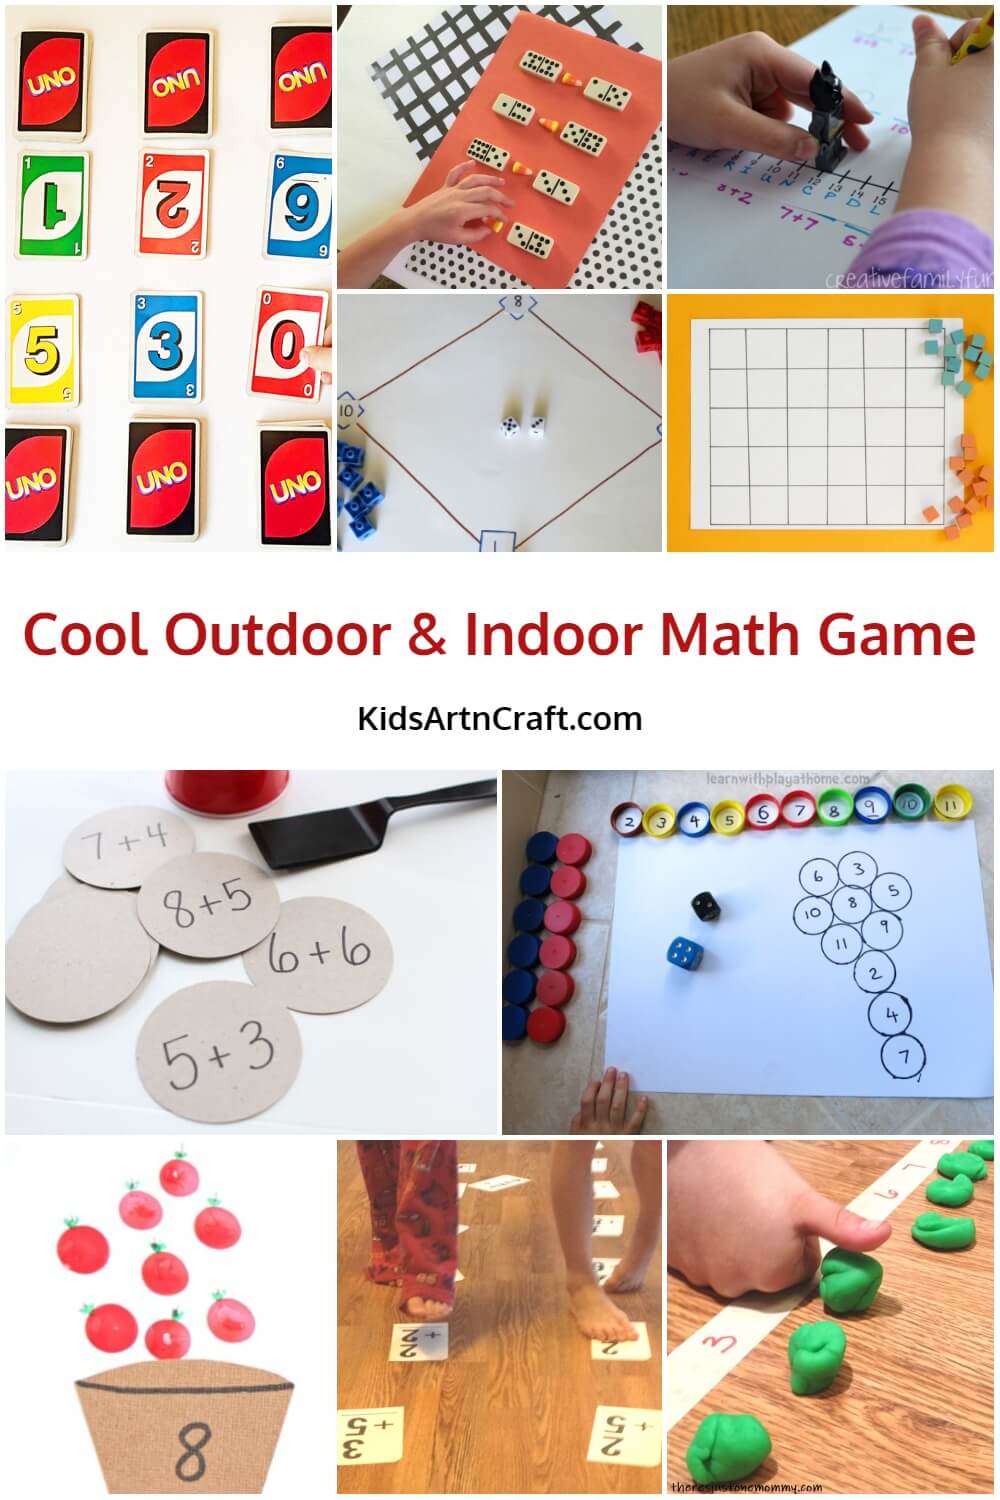 Cool Outdoor & Indoor Math Games for Kids